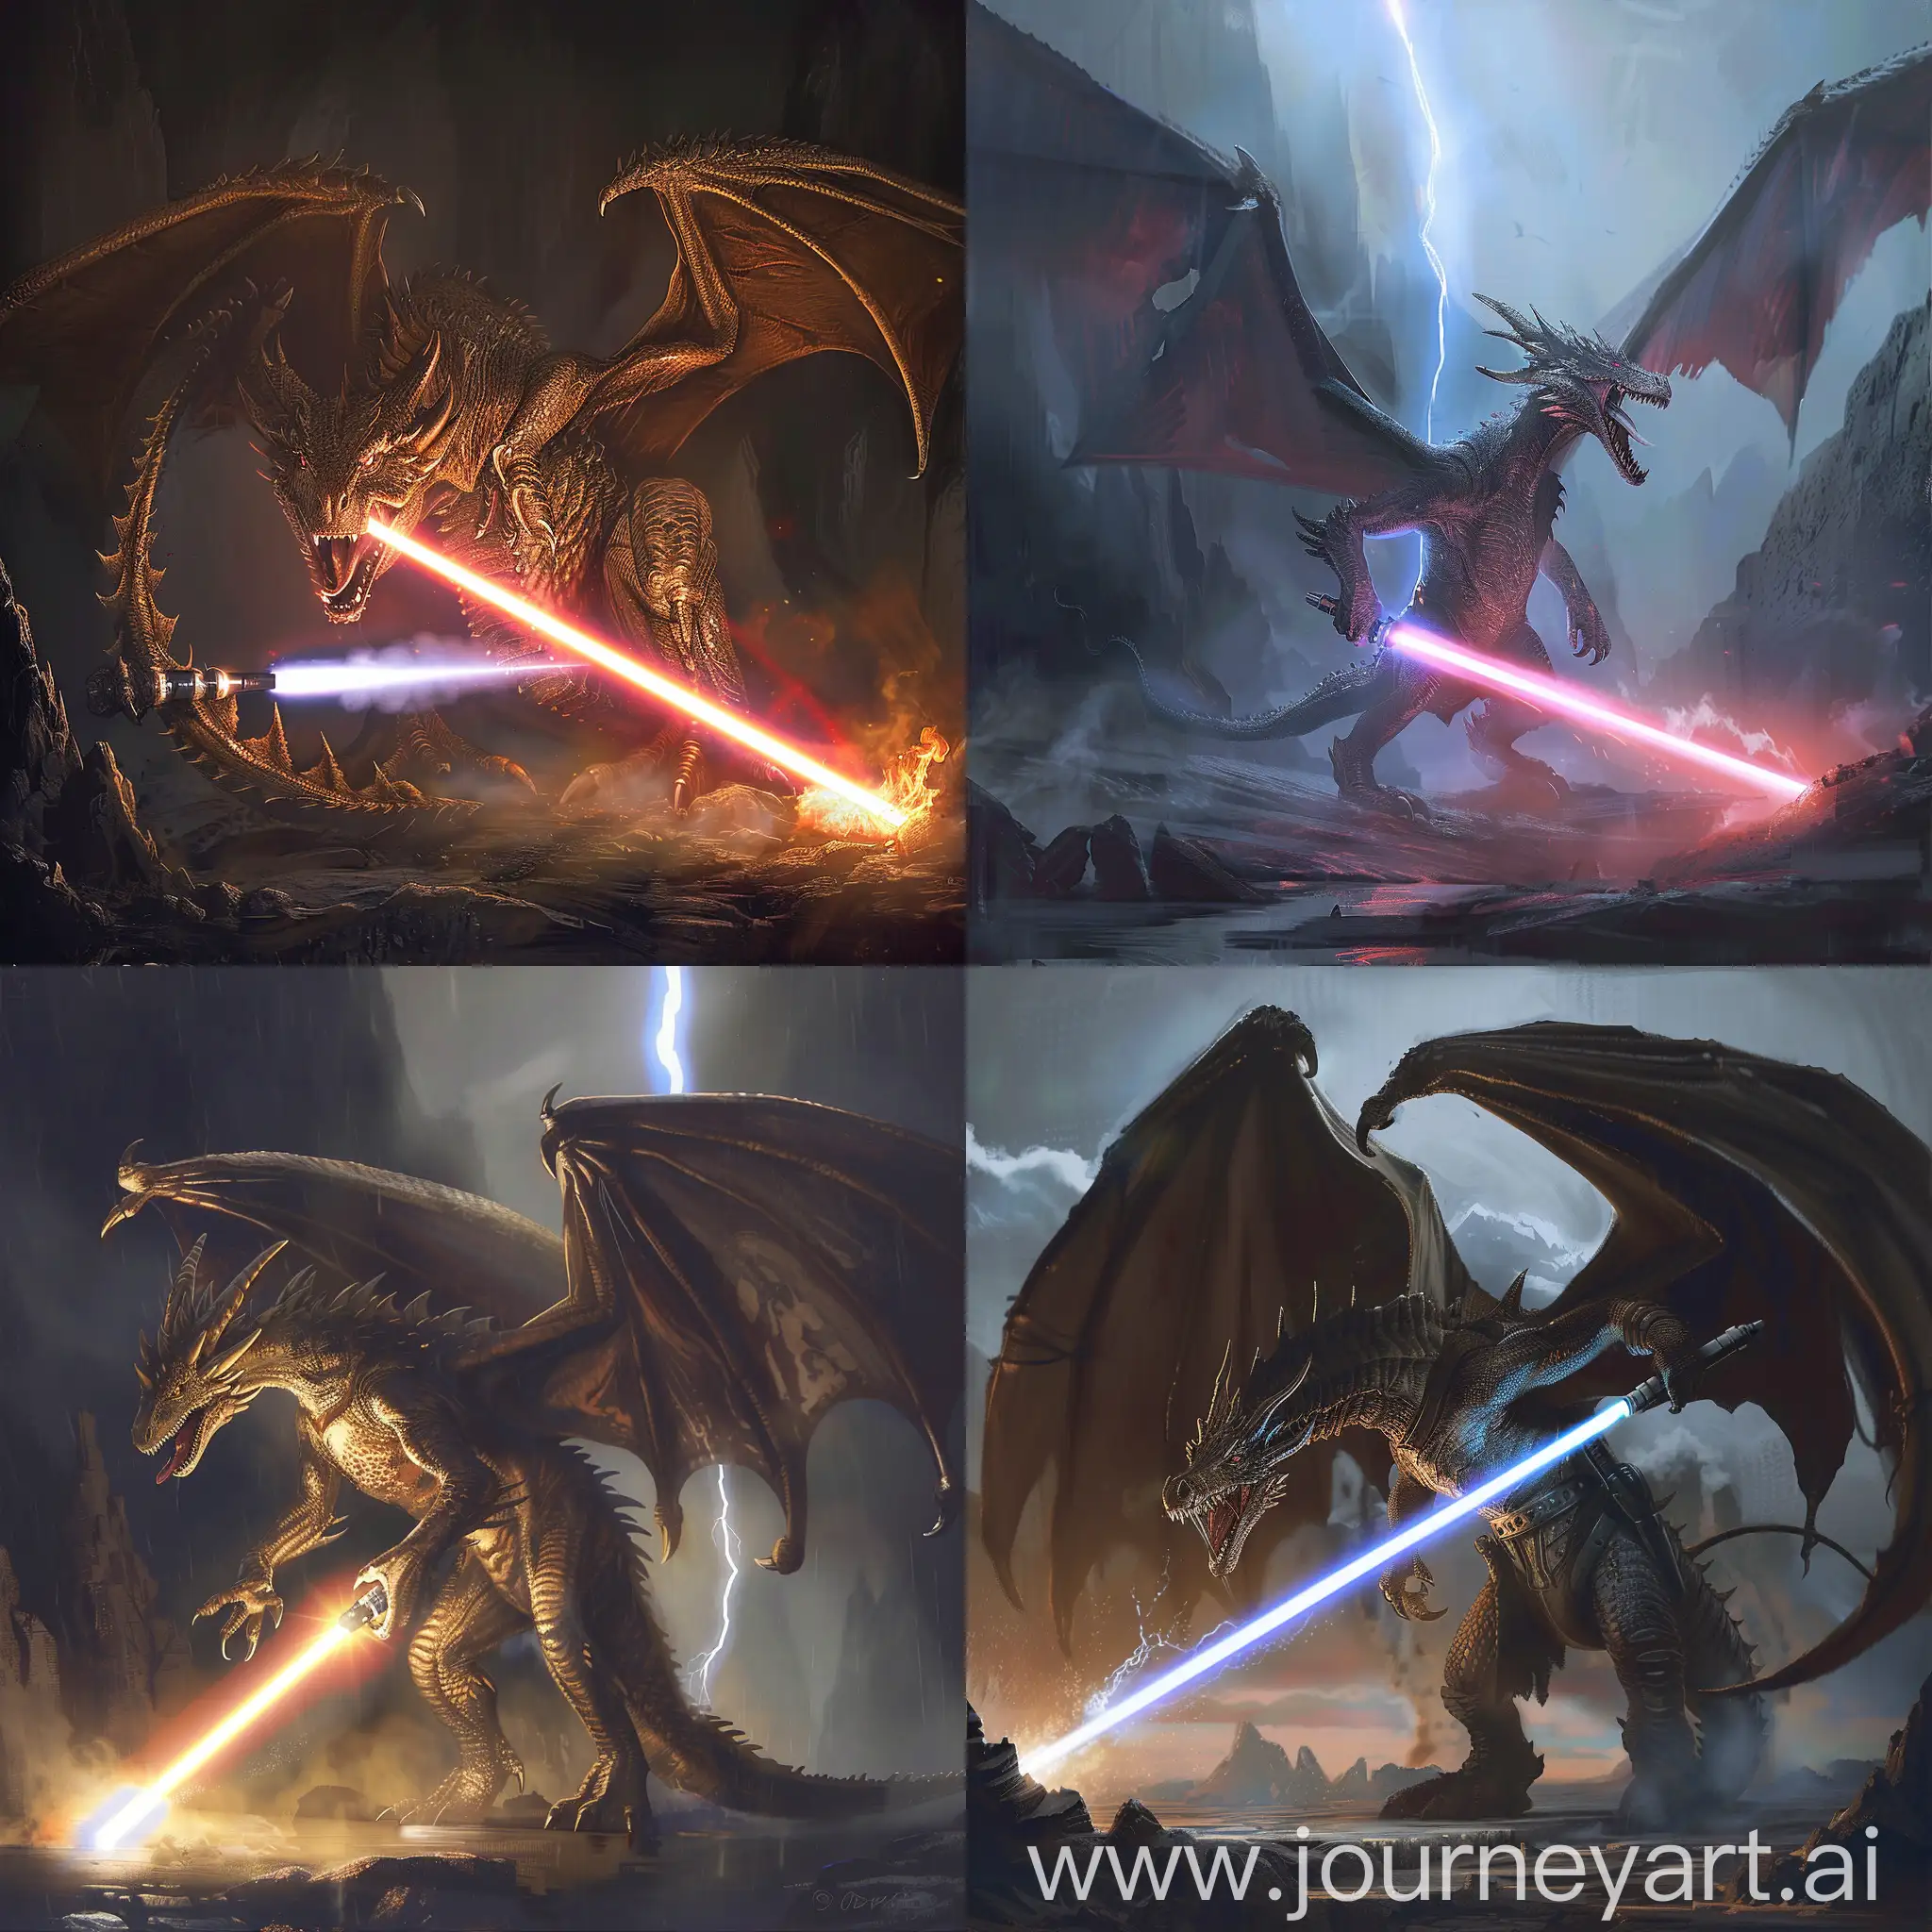 Majestic-Dragon-wielding-a-radiant-lightsaber